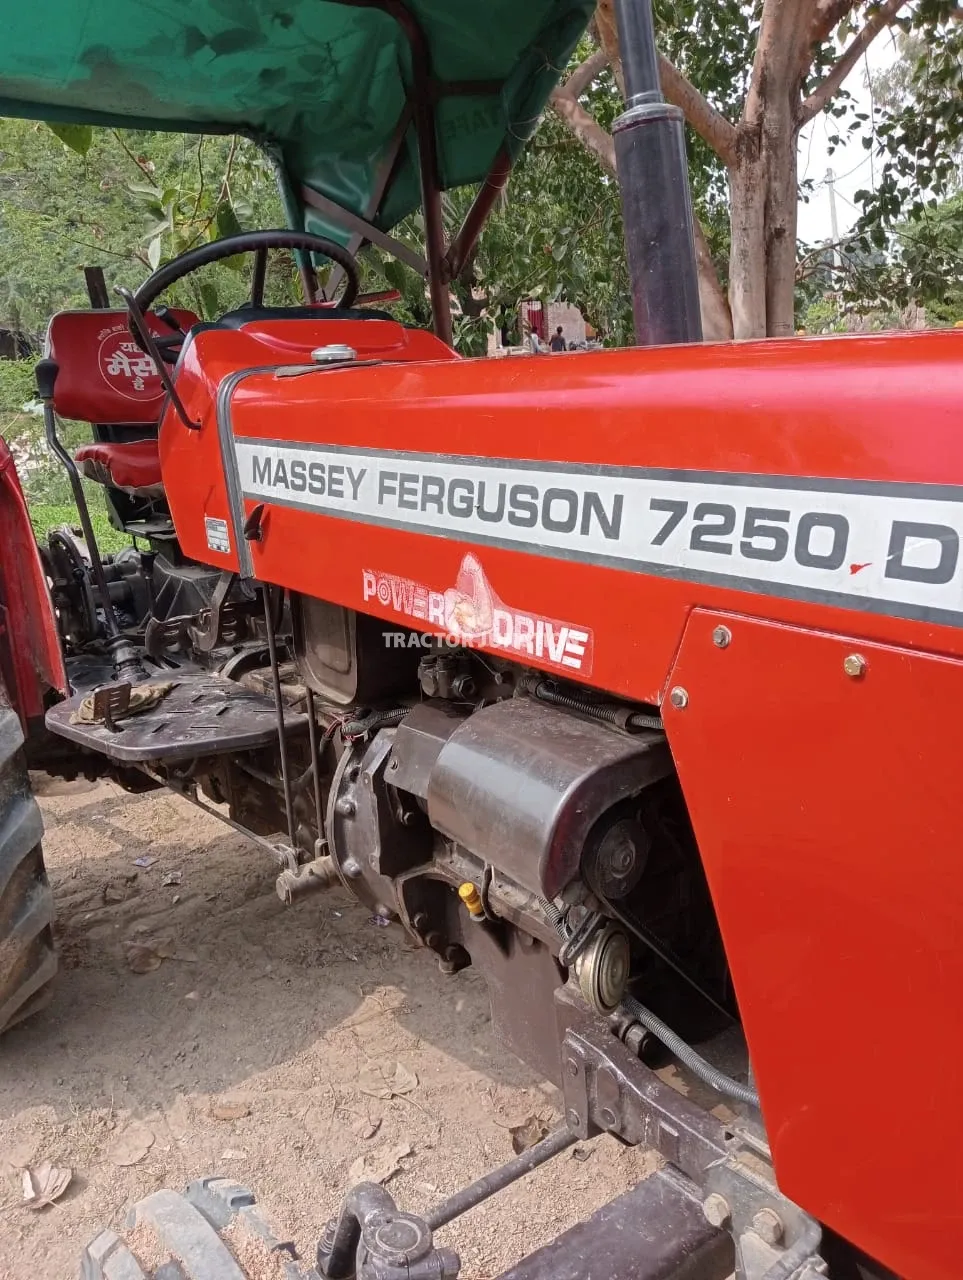 Massey Ferguson 7250 DI